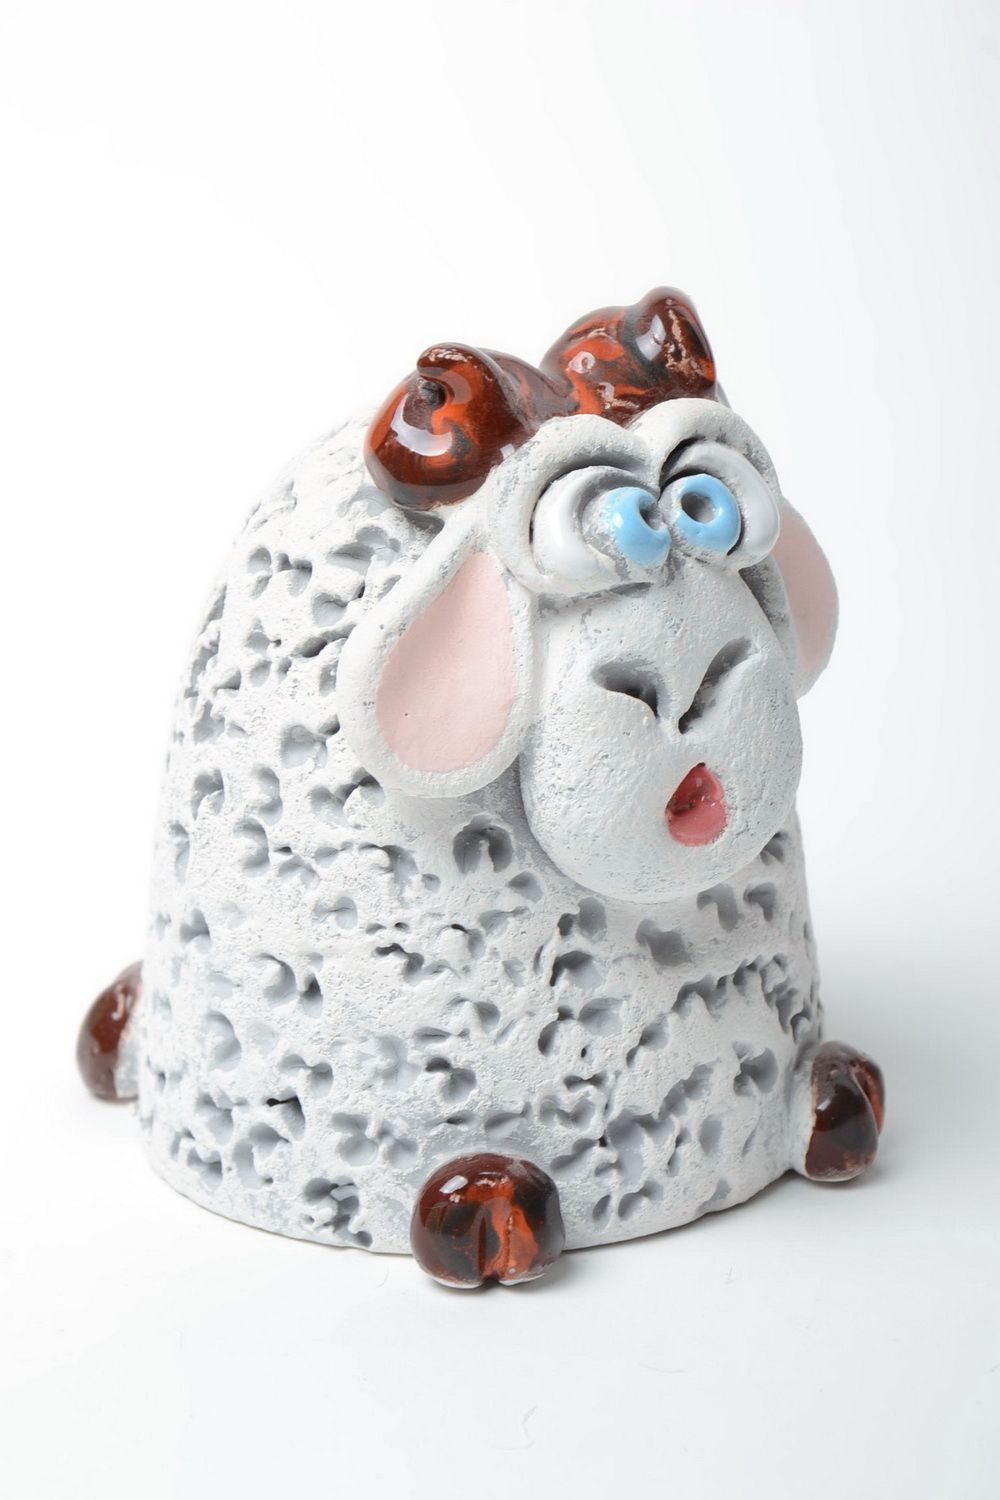 Spardose Keramiksparbüchse Keramik Pomme Pidou Sabo Design Schaf Giselle